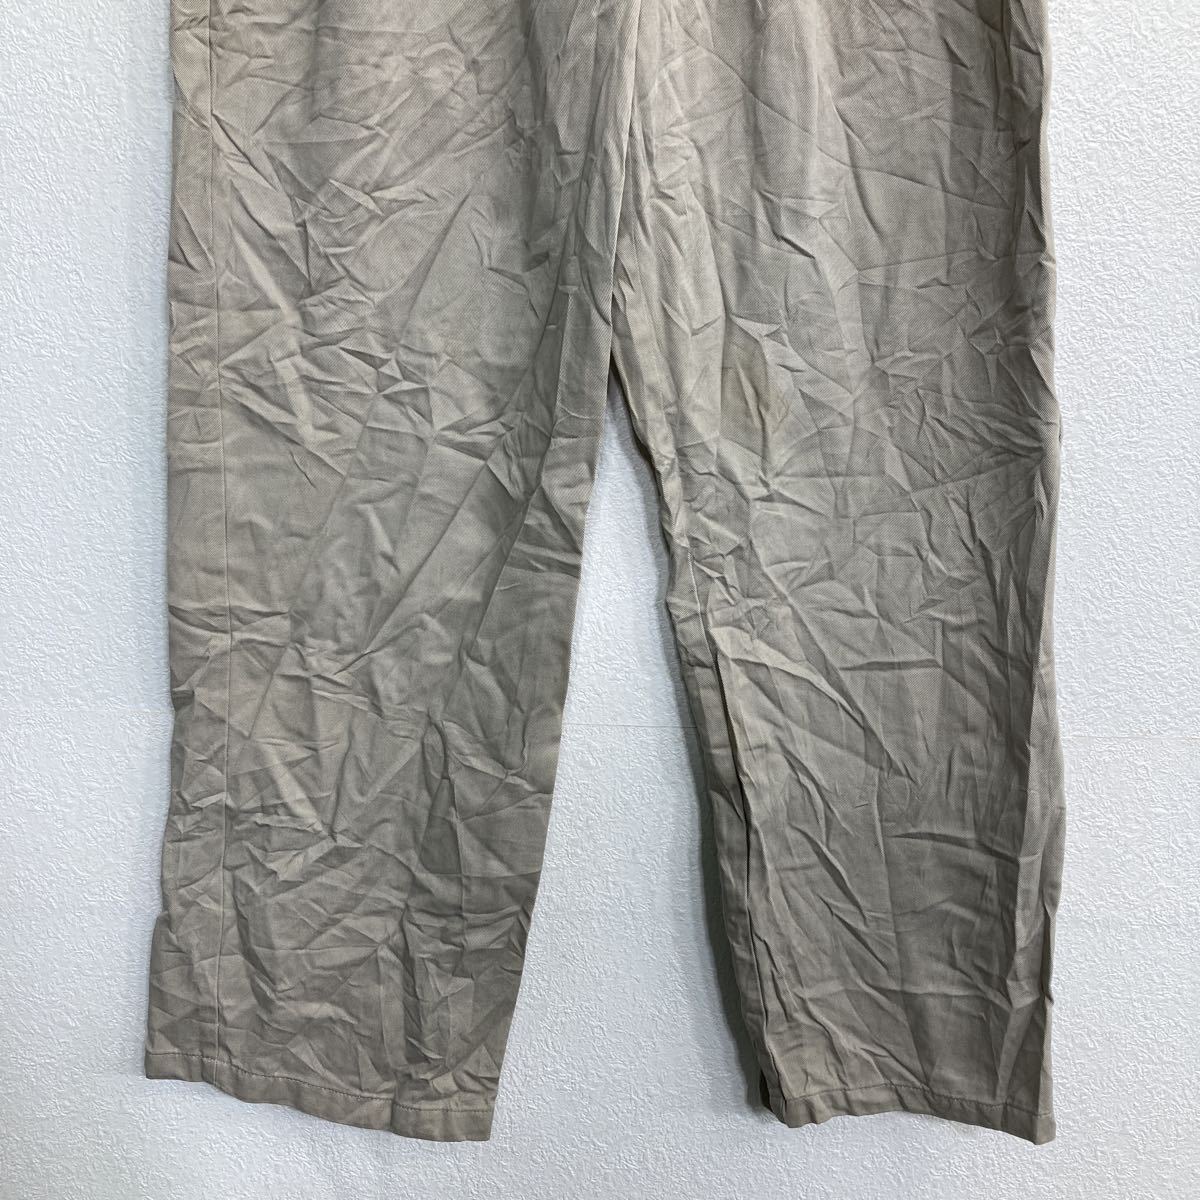 DOCKERS брюки из твила W29 Docker's tuck брюки женский бежевый б/у одежда . America скупка 2302-302